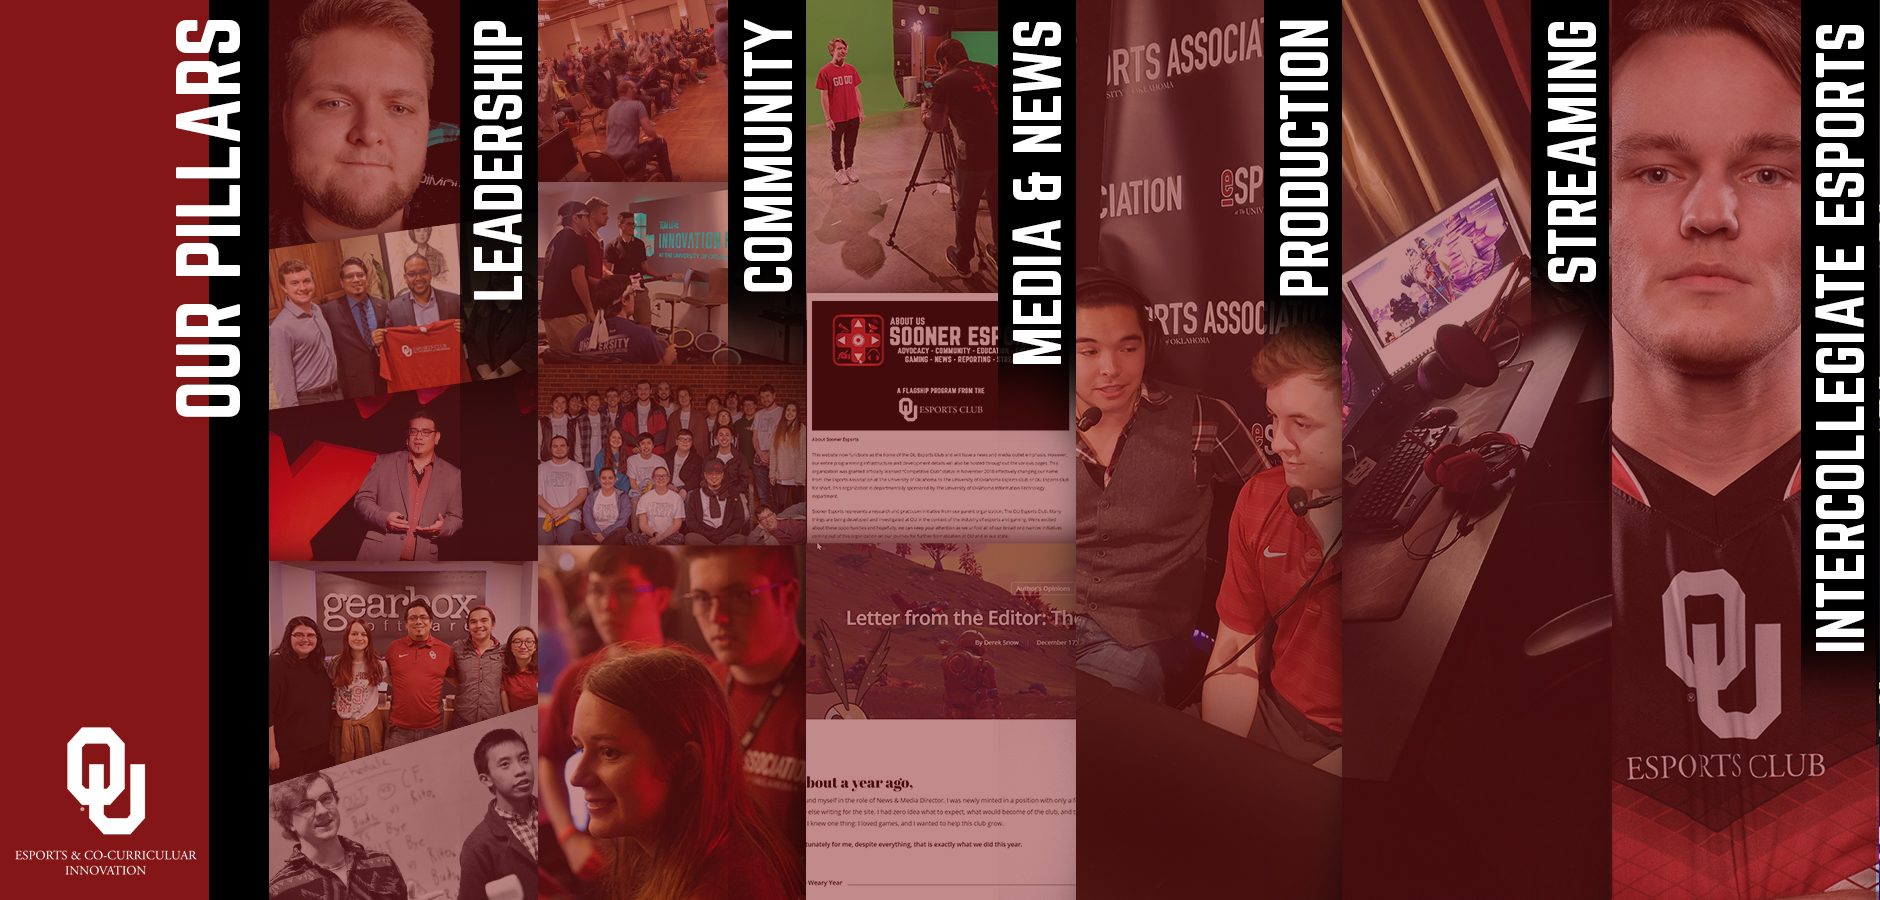 Our Pillars & Programs: Leadership, Community, Media & News, Production, Streaming Entertainment, & Intercollegiate Esports